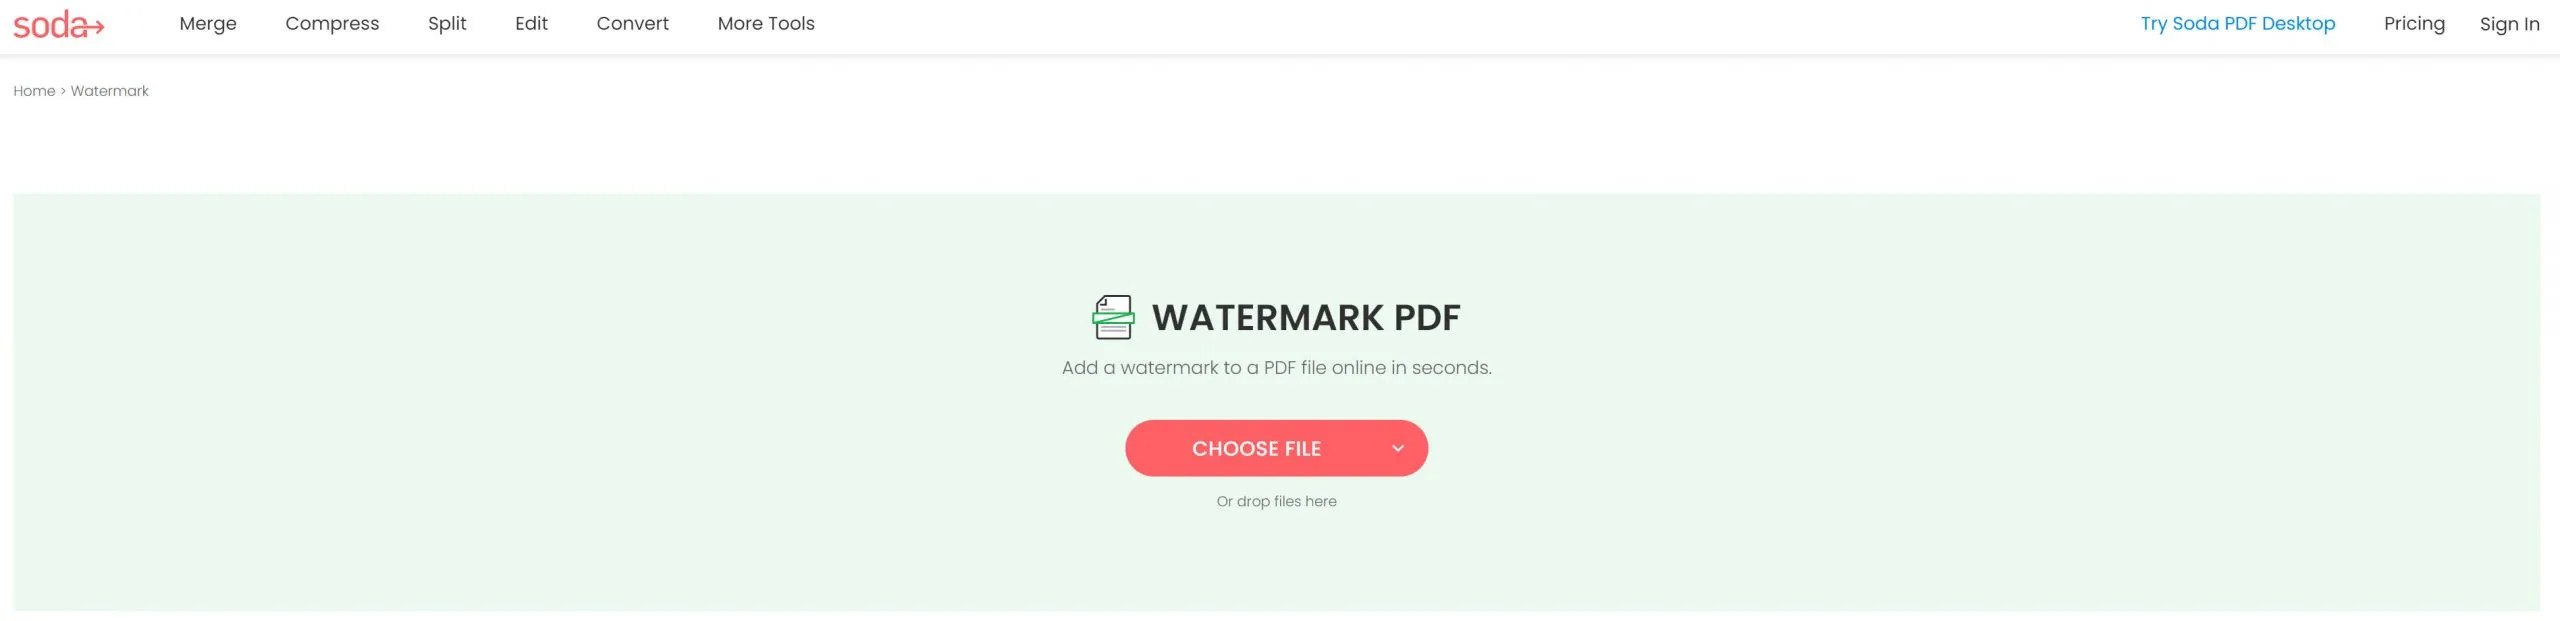 add watermark to pdf with soda